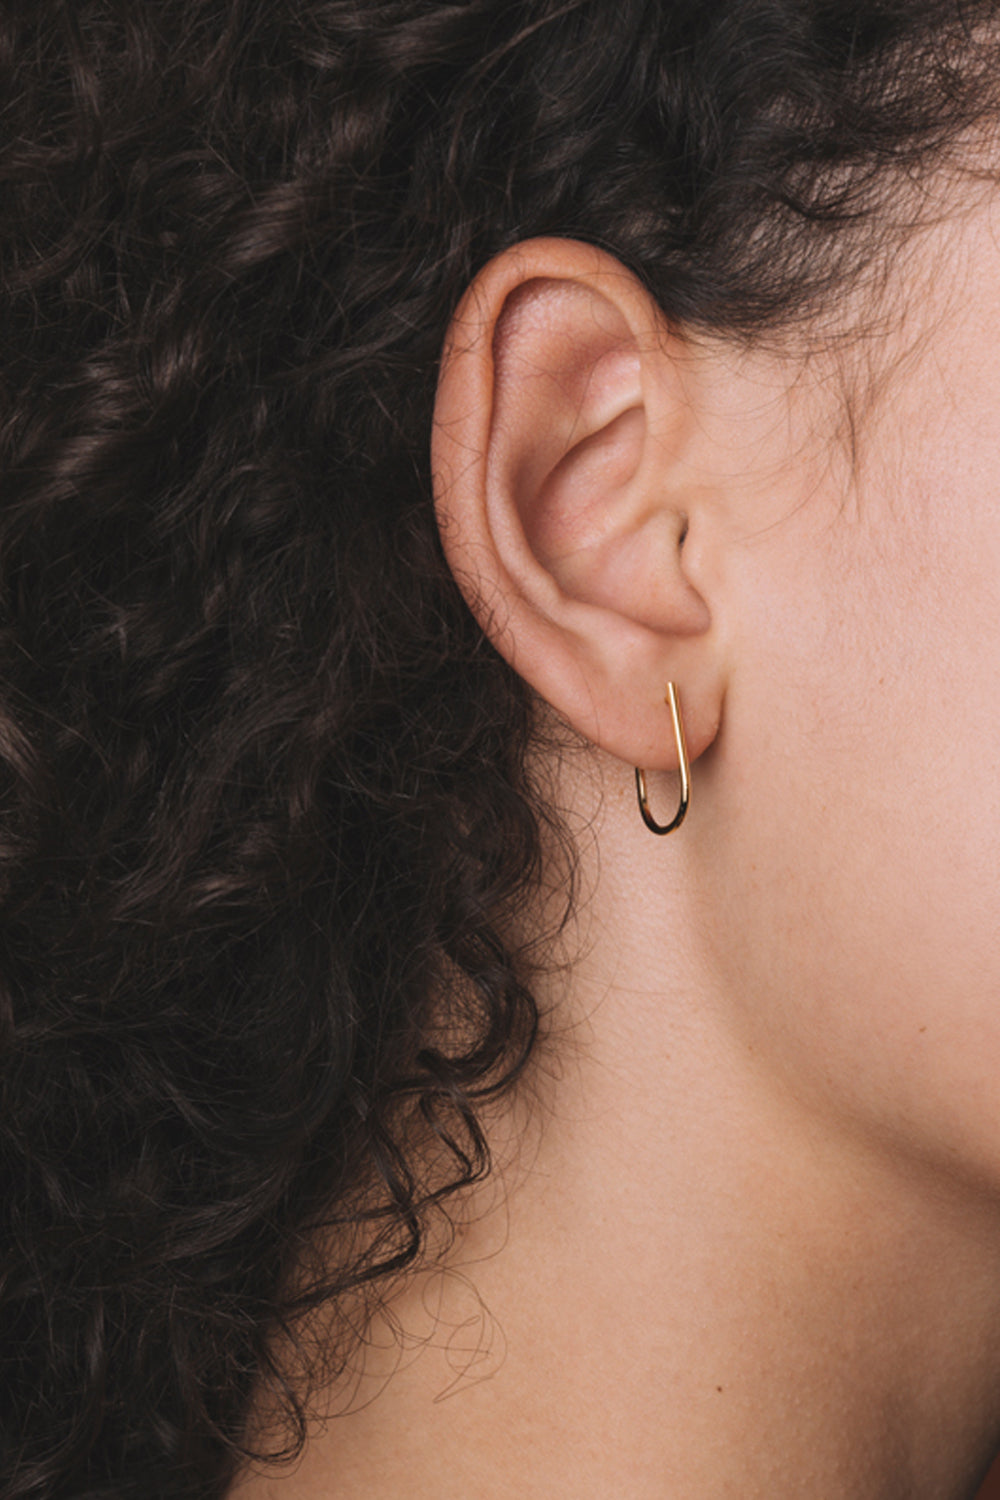 Large U-shape earrings